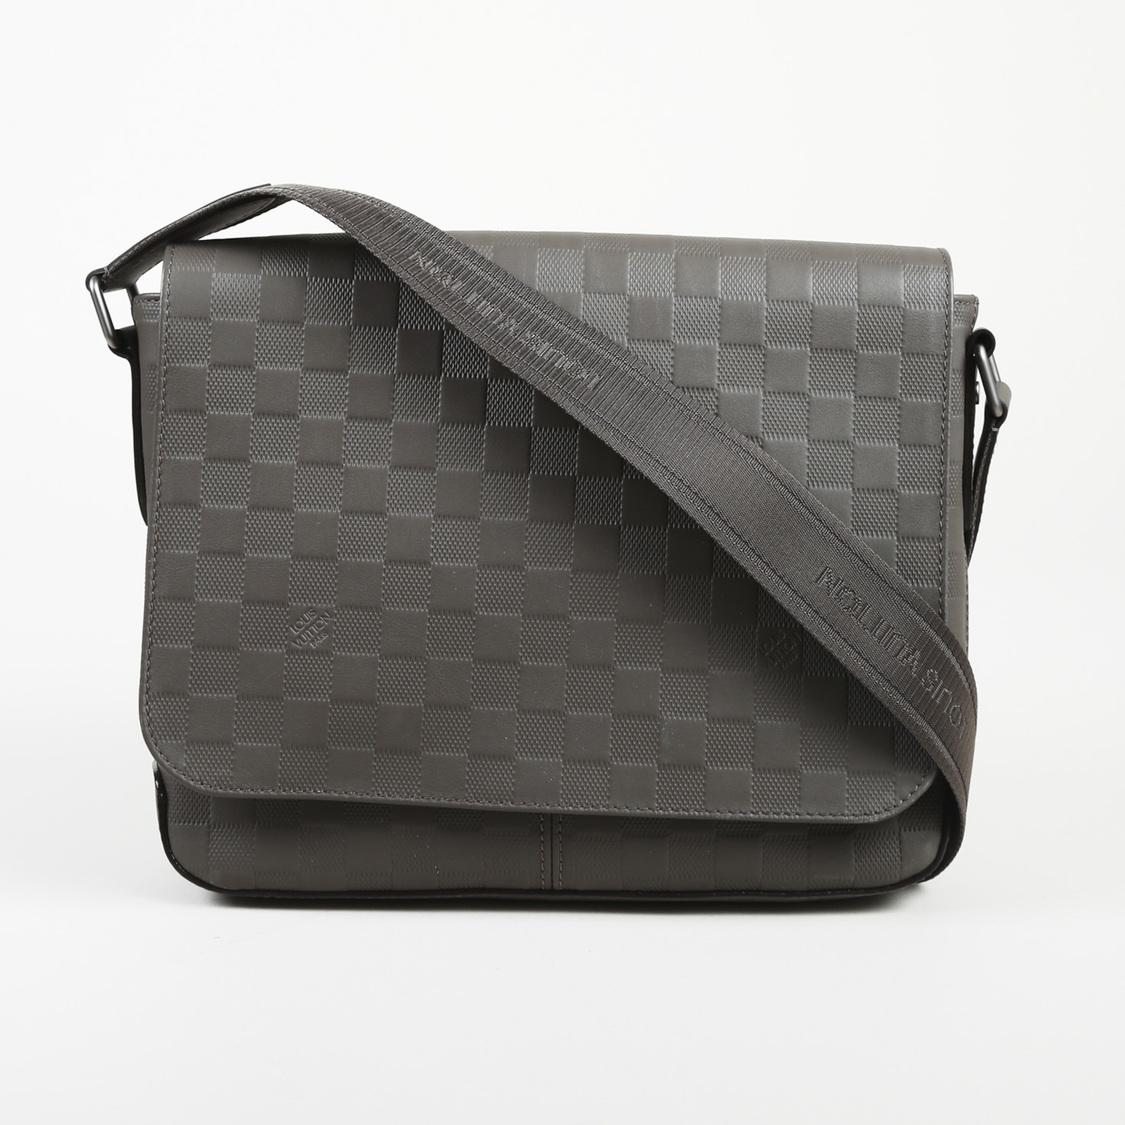 Louis Vuitton Canvas District Pm Graphite Damier Infini Messenger Bag in Gray - Lyst